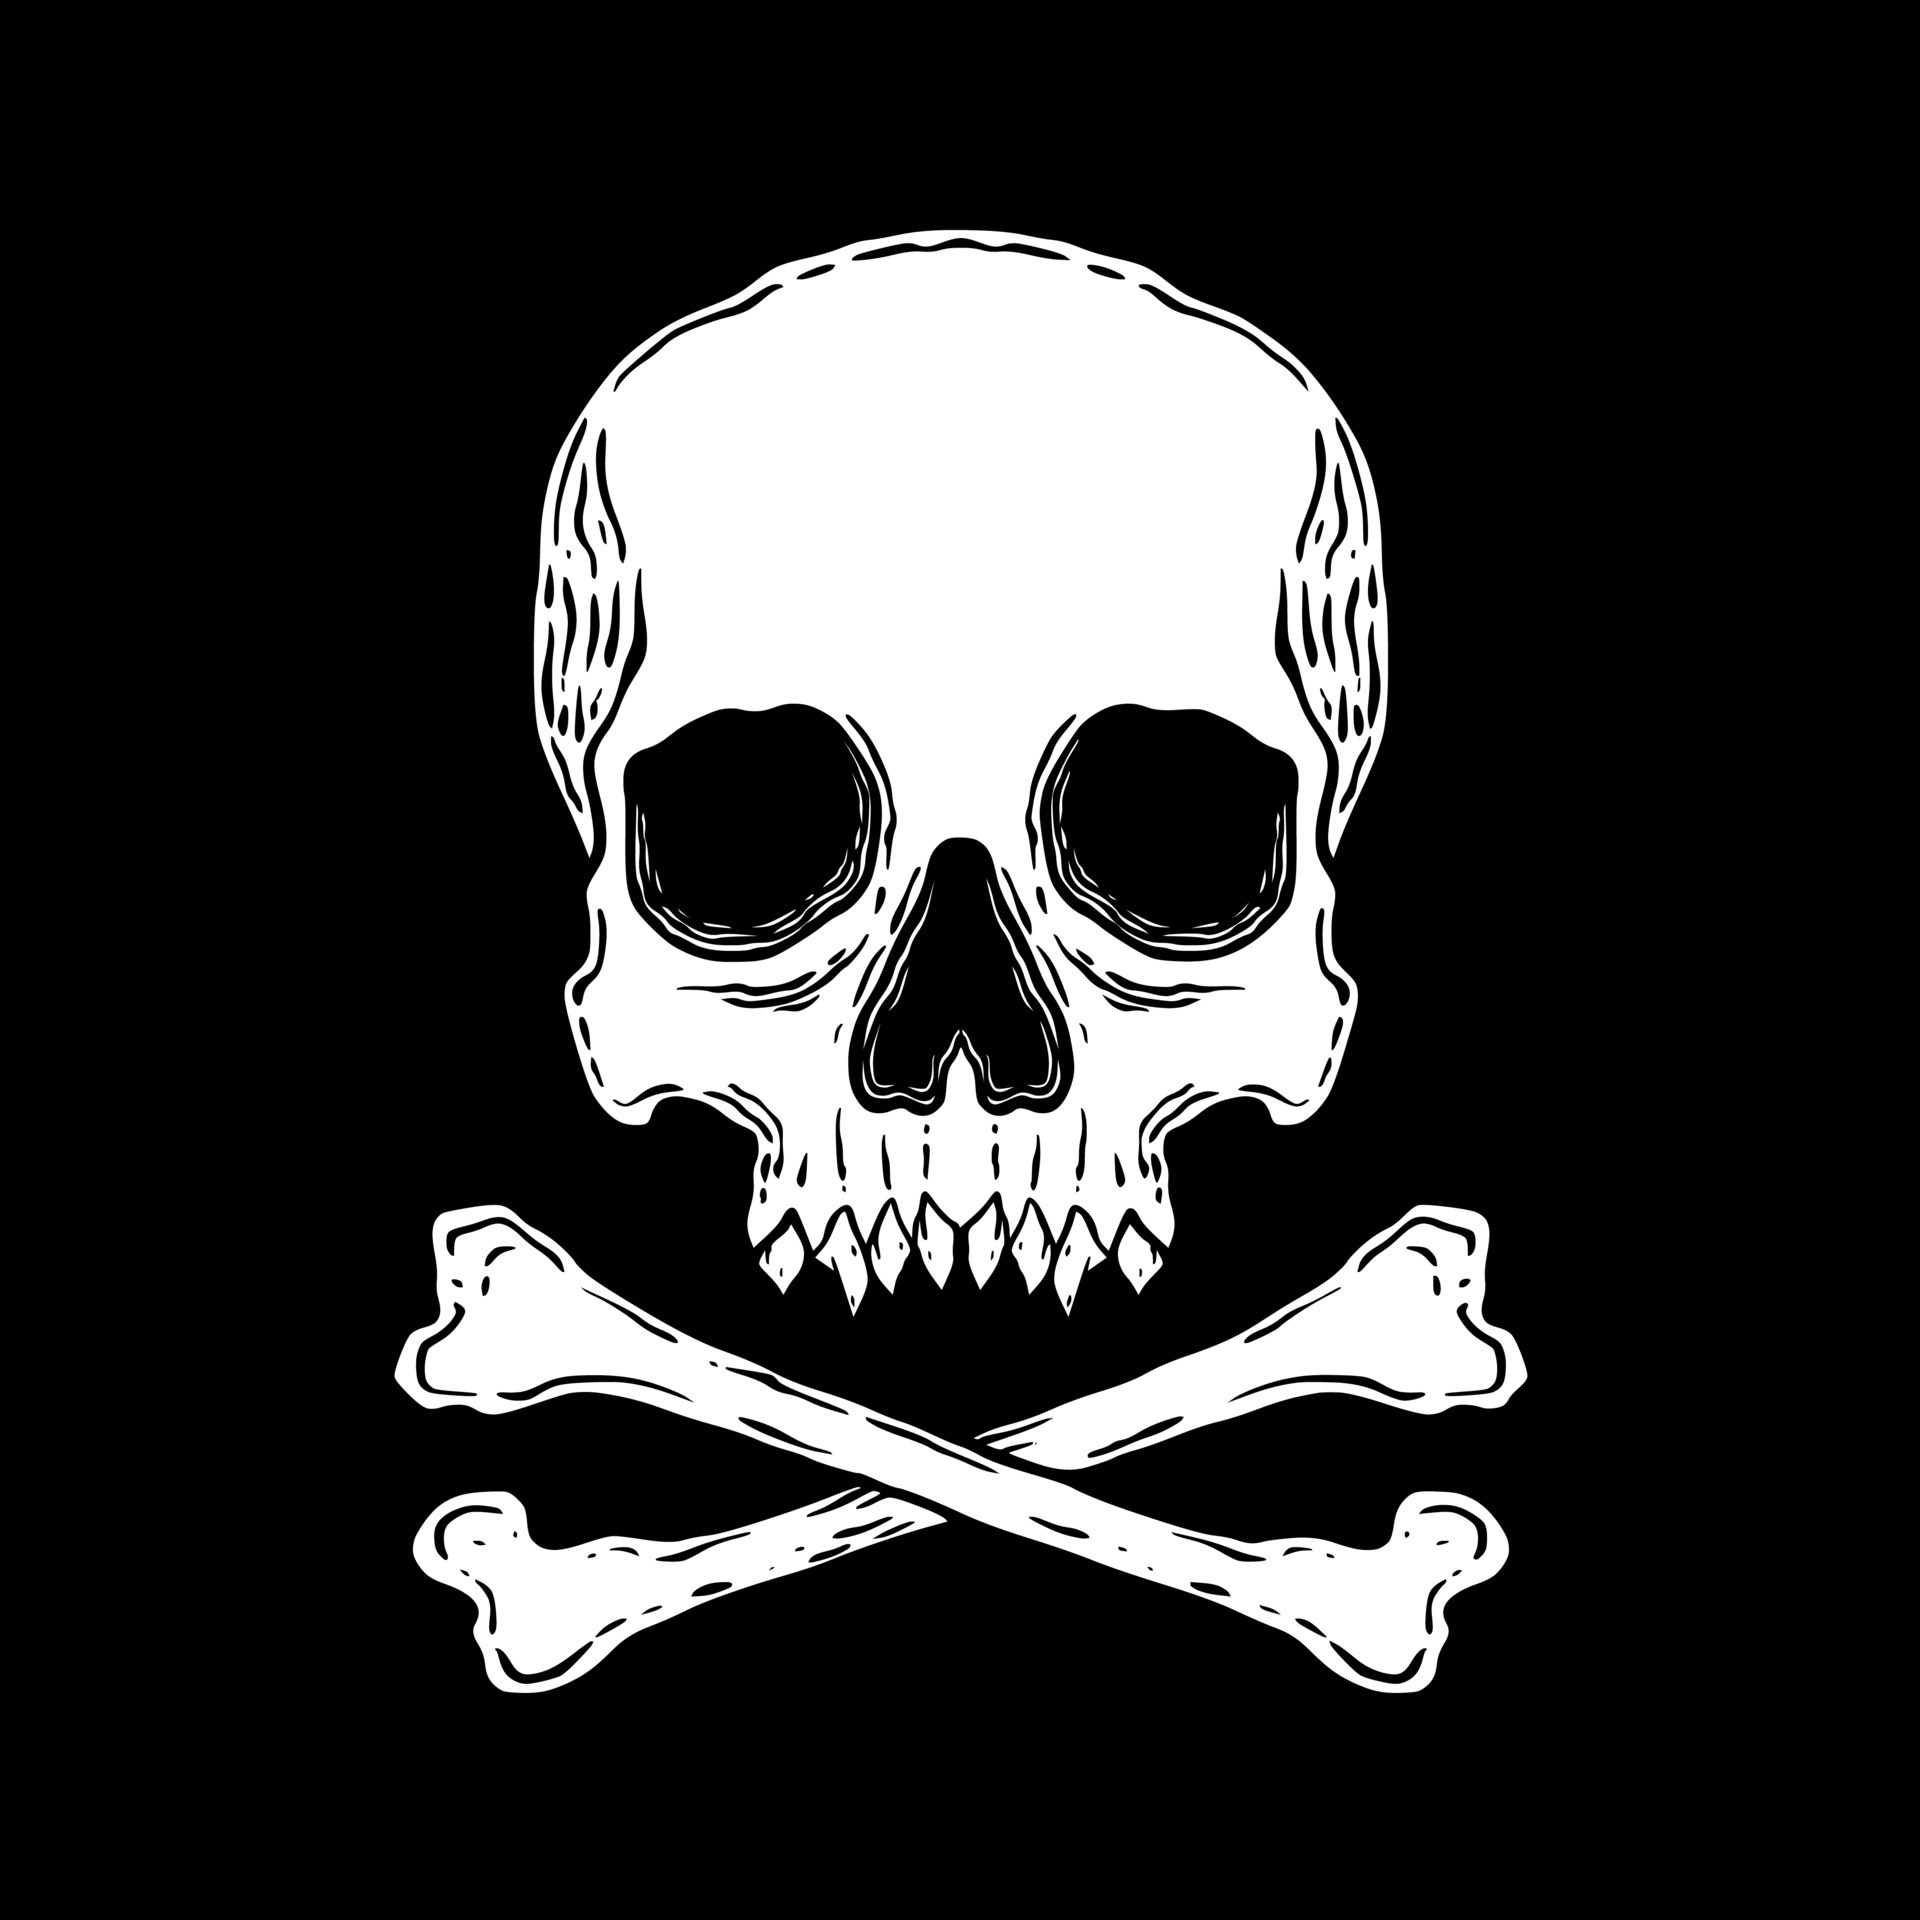 Latest Skull and cross bones Tattoos  Find Skull and cross bones Tattoos